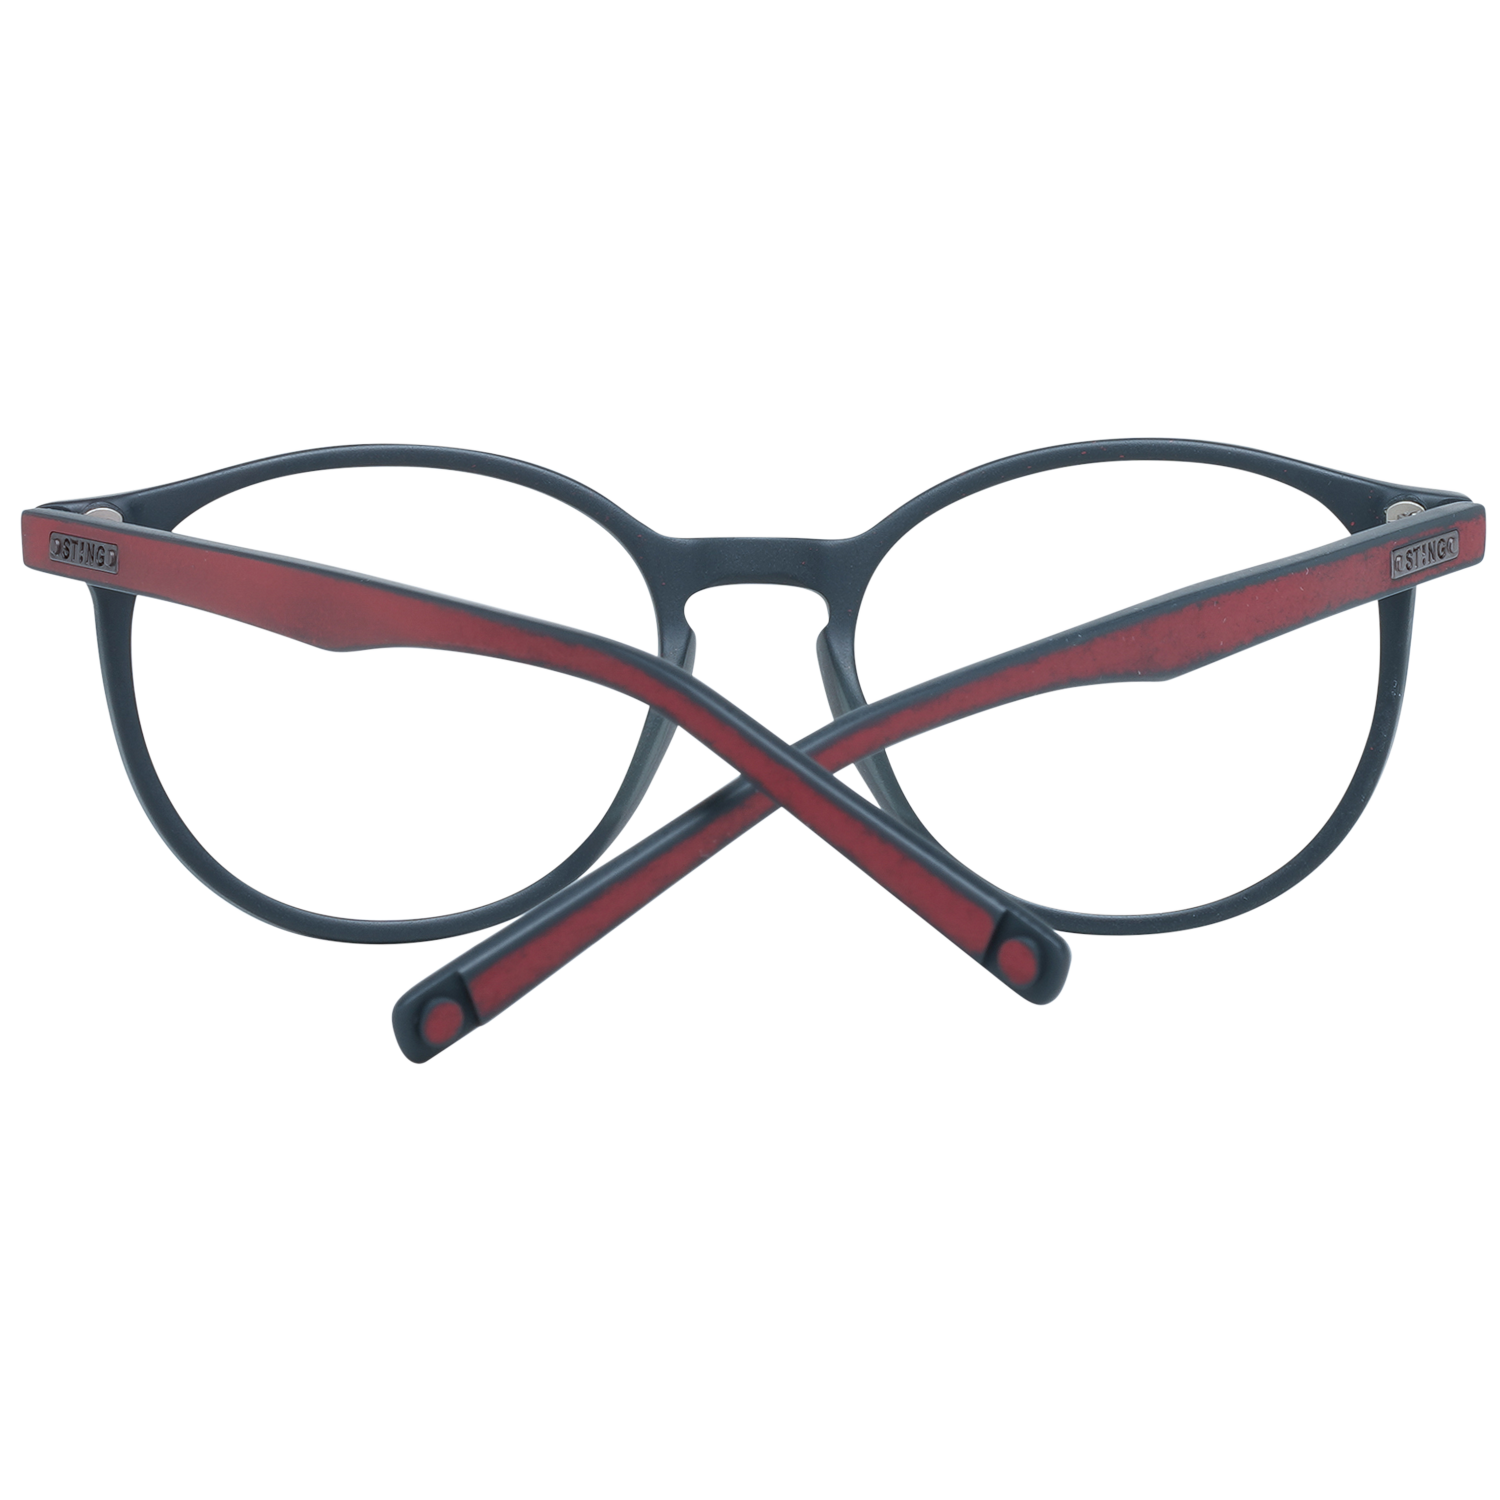 Sting Frames Sting Optical Frame VST039 6HTM 49 Eyeglasses Eyewear UK USA Australia 